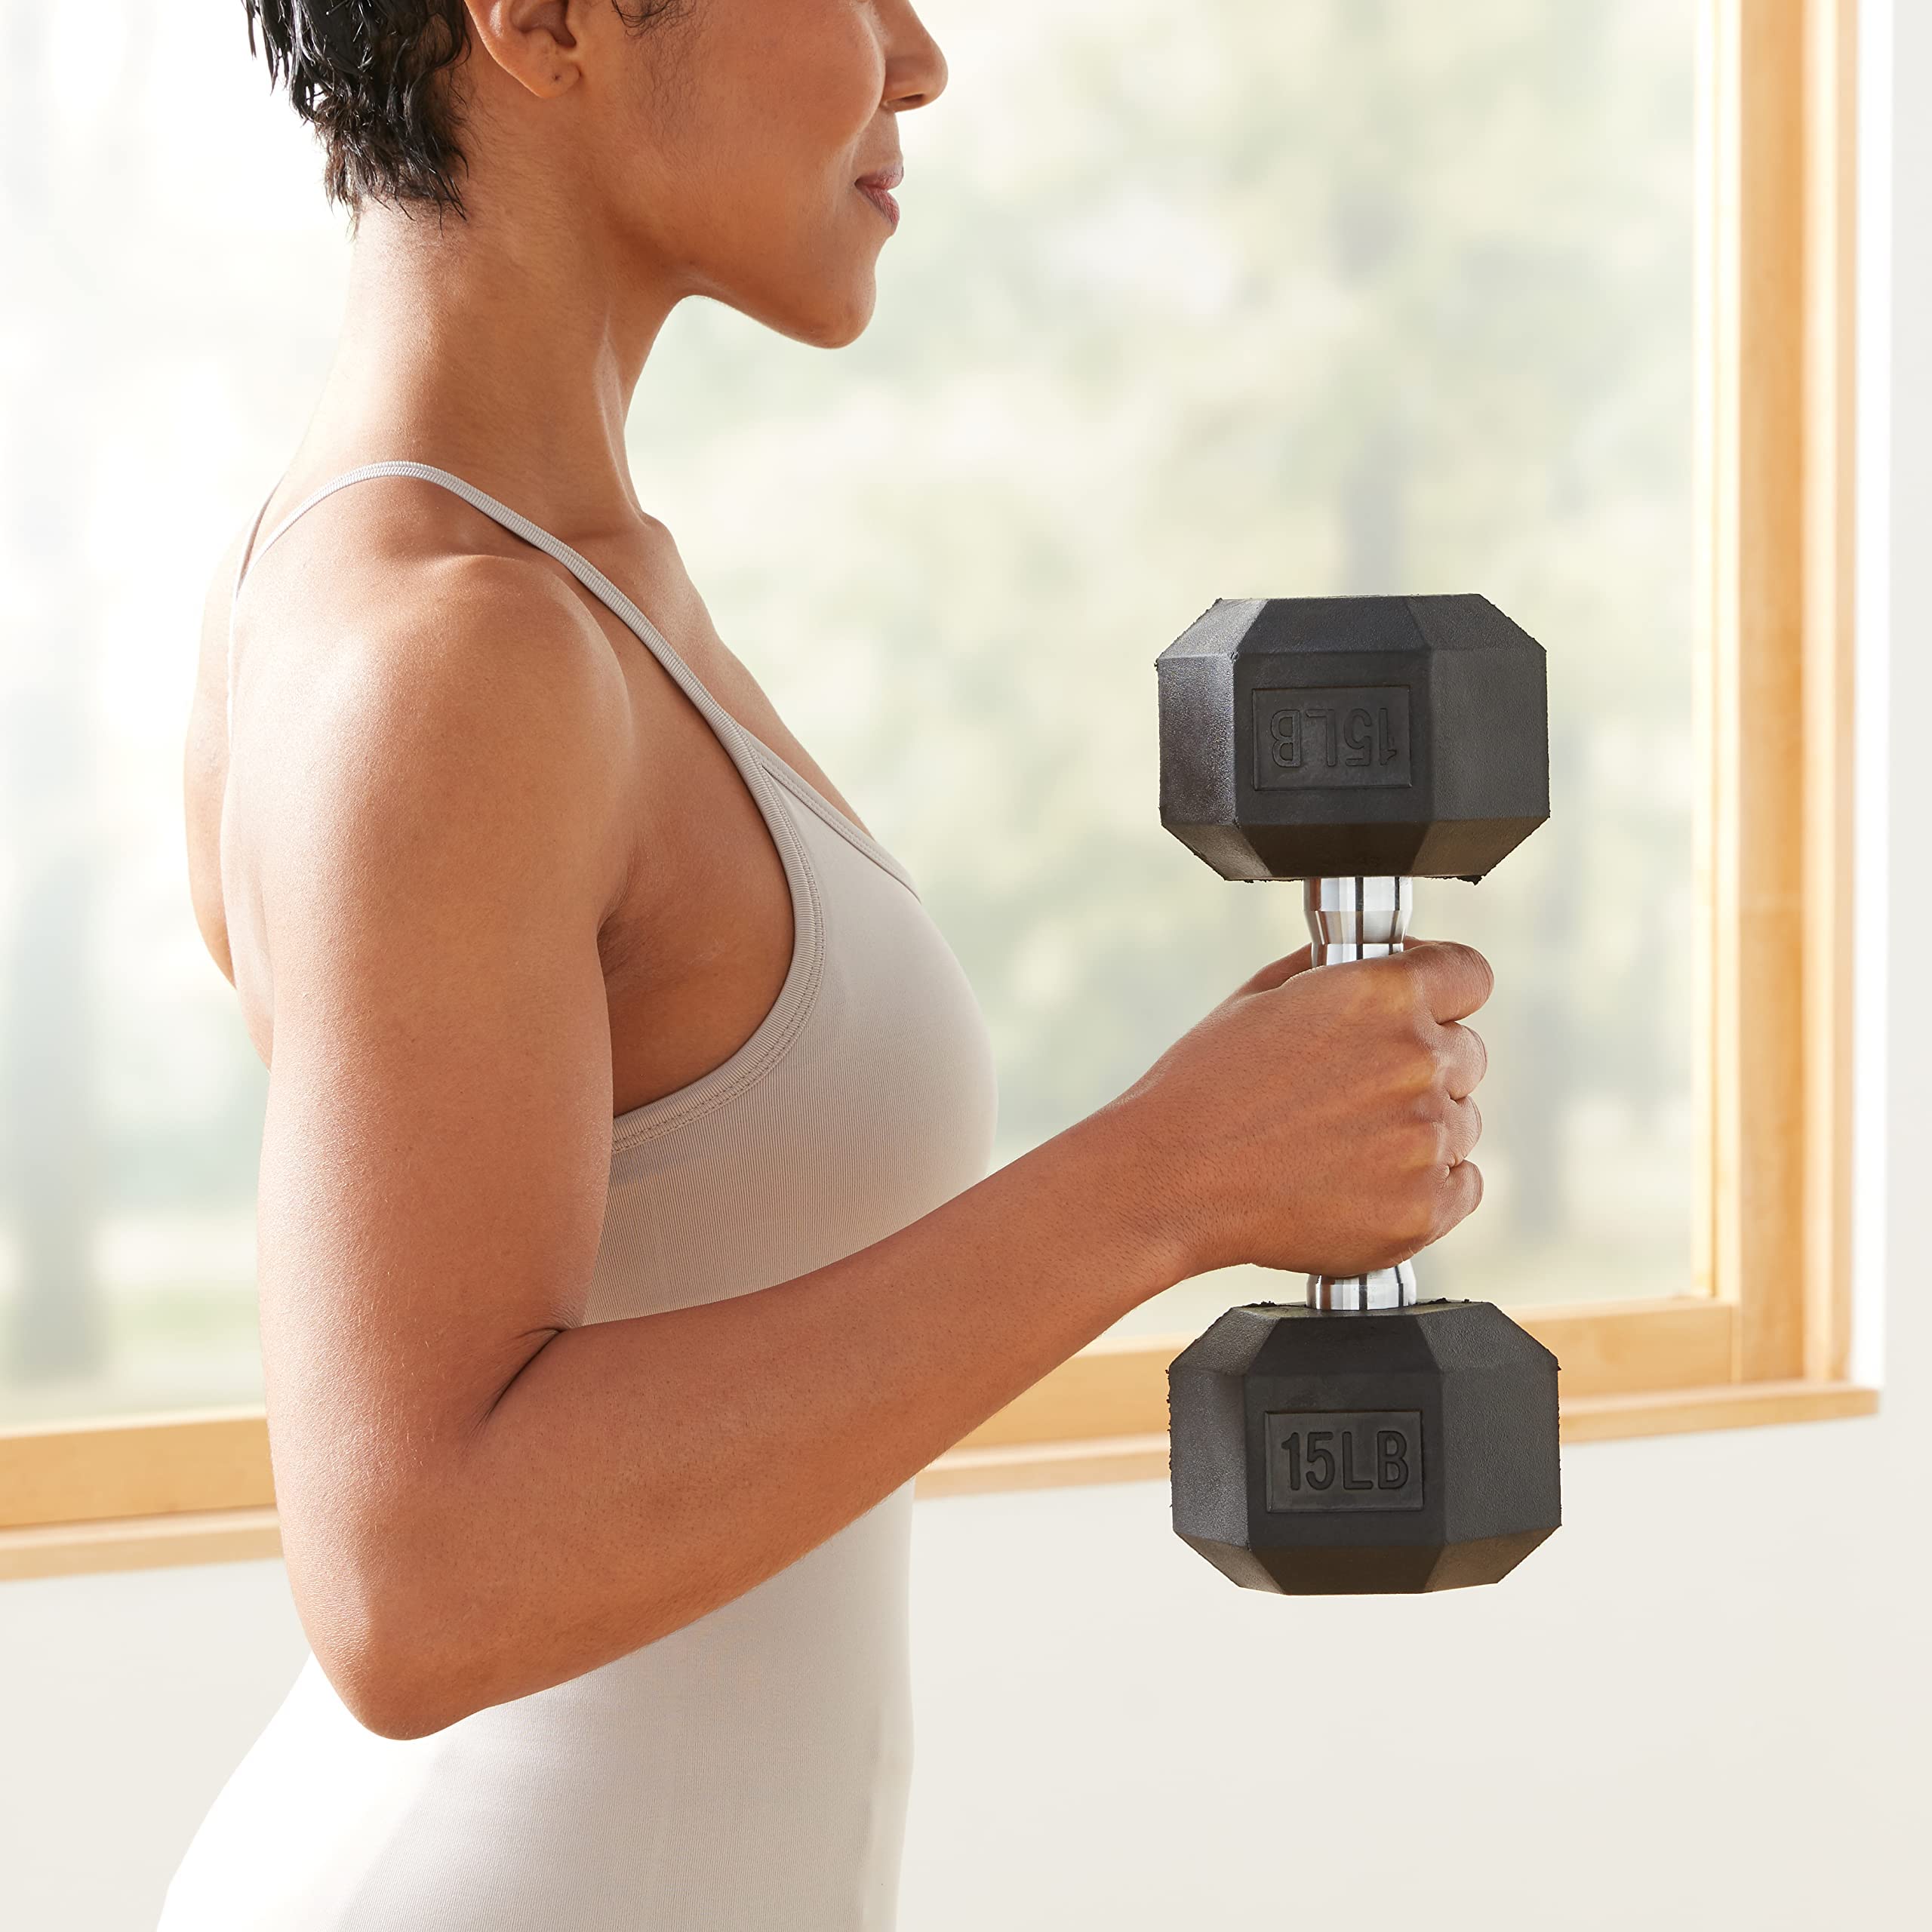 Amazon Basics Rubber Encased Exercise & Fitness Hex Dumbbell, Hand Weight For Strength Training